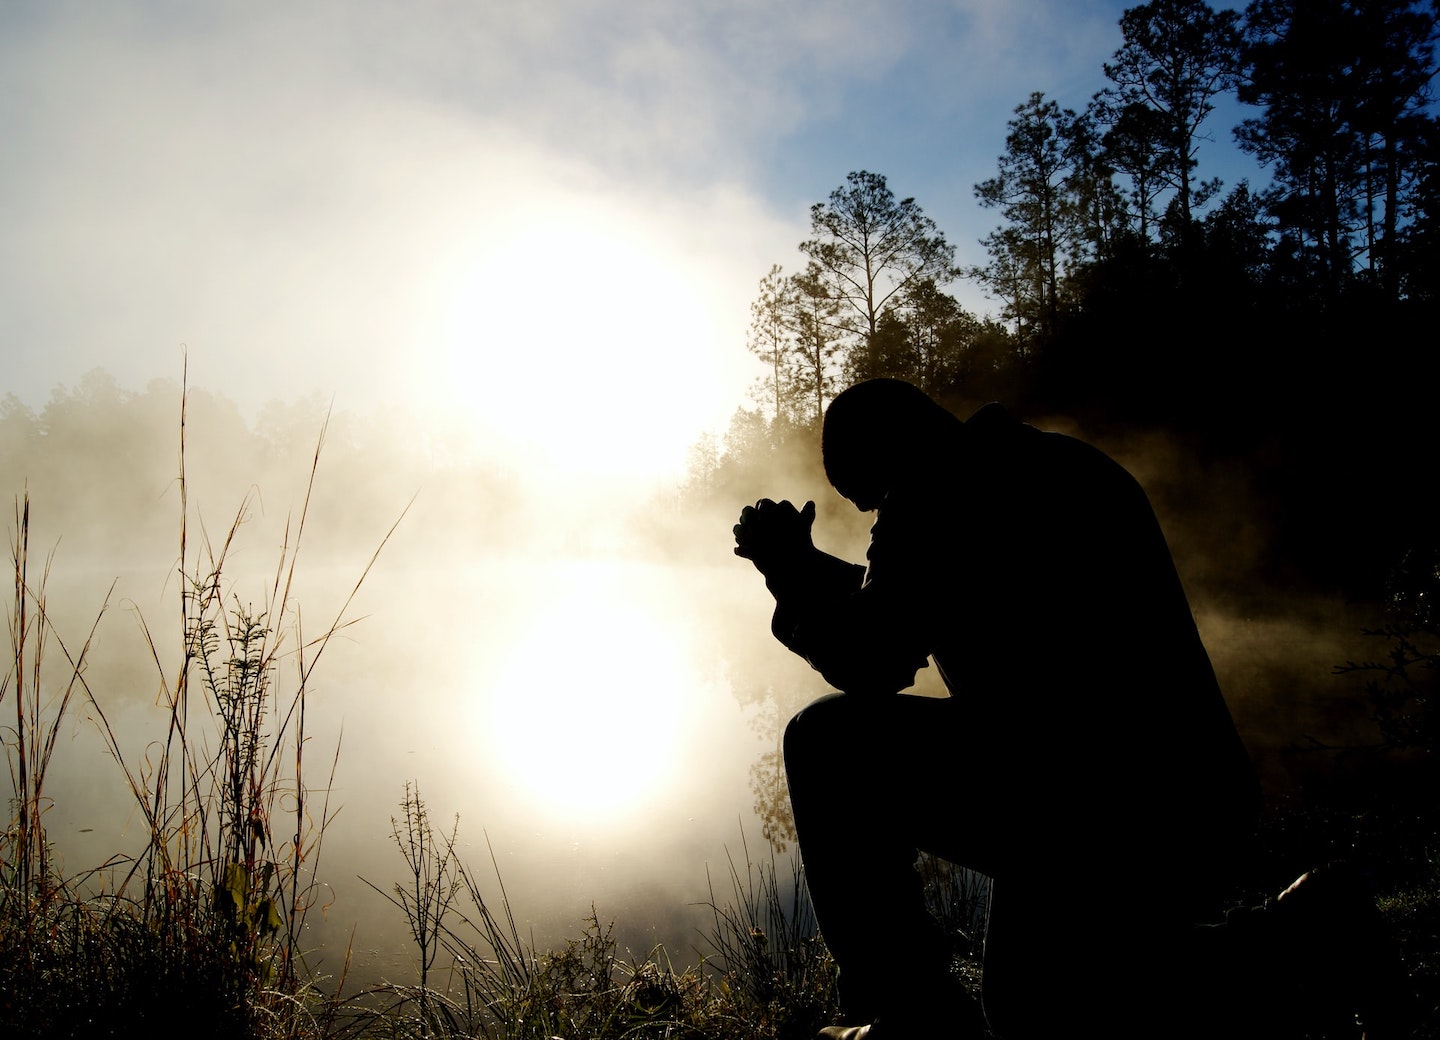 man praying in the morning mist kneeling on ground